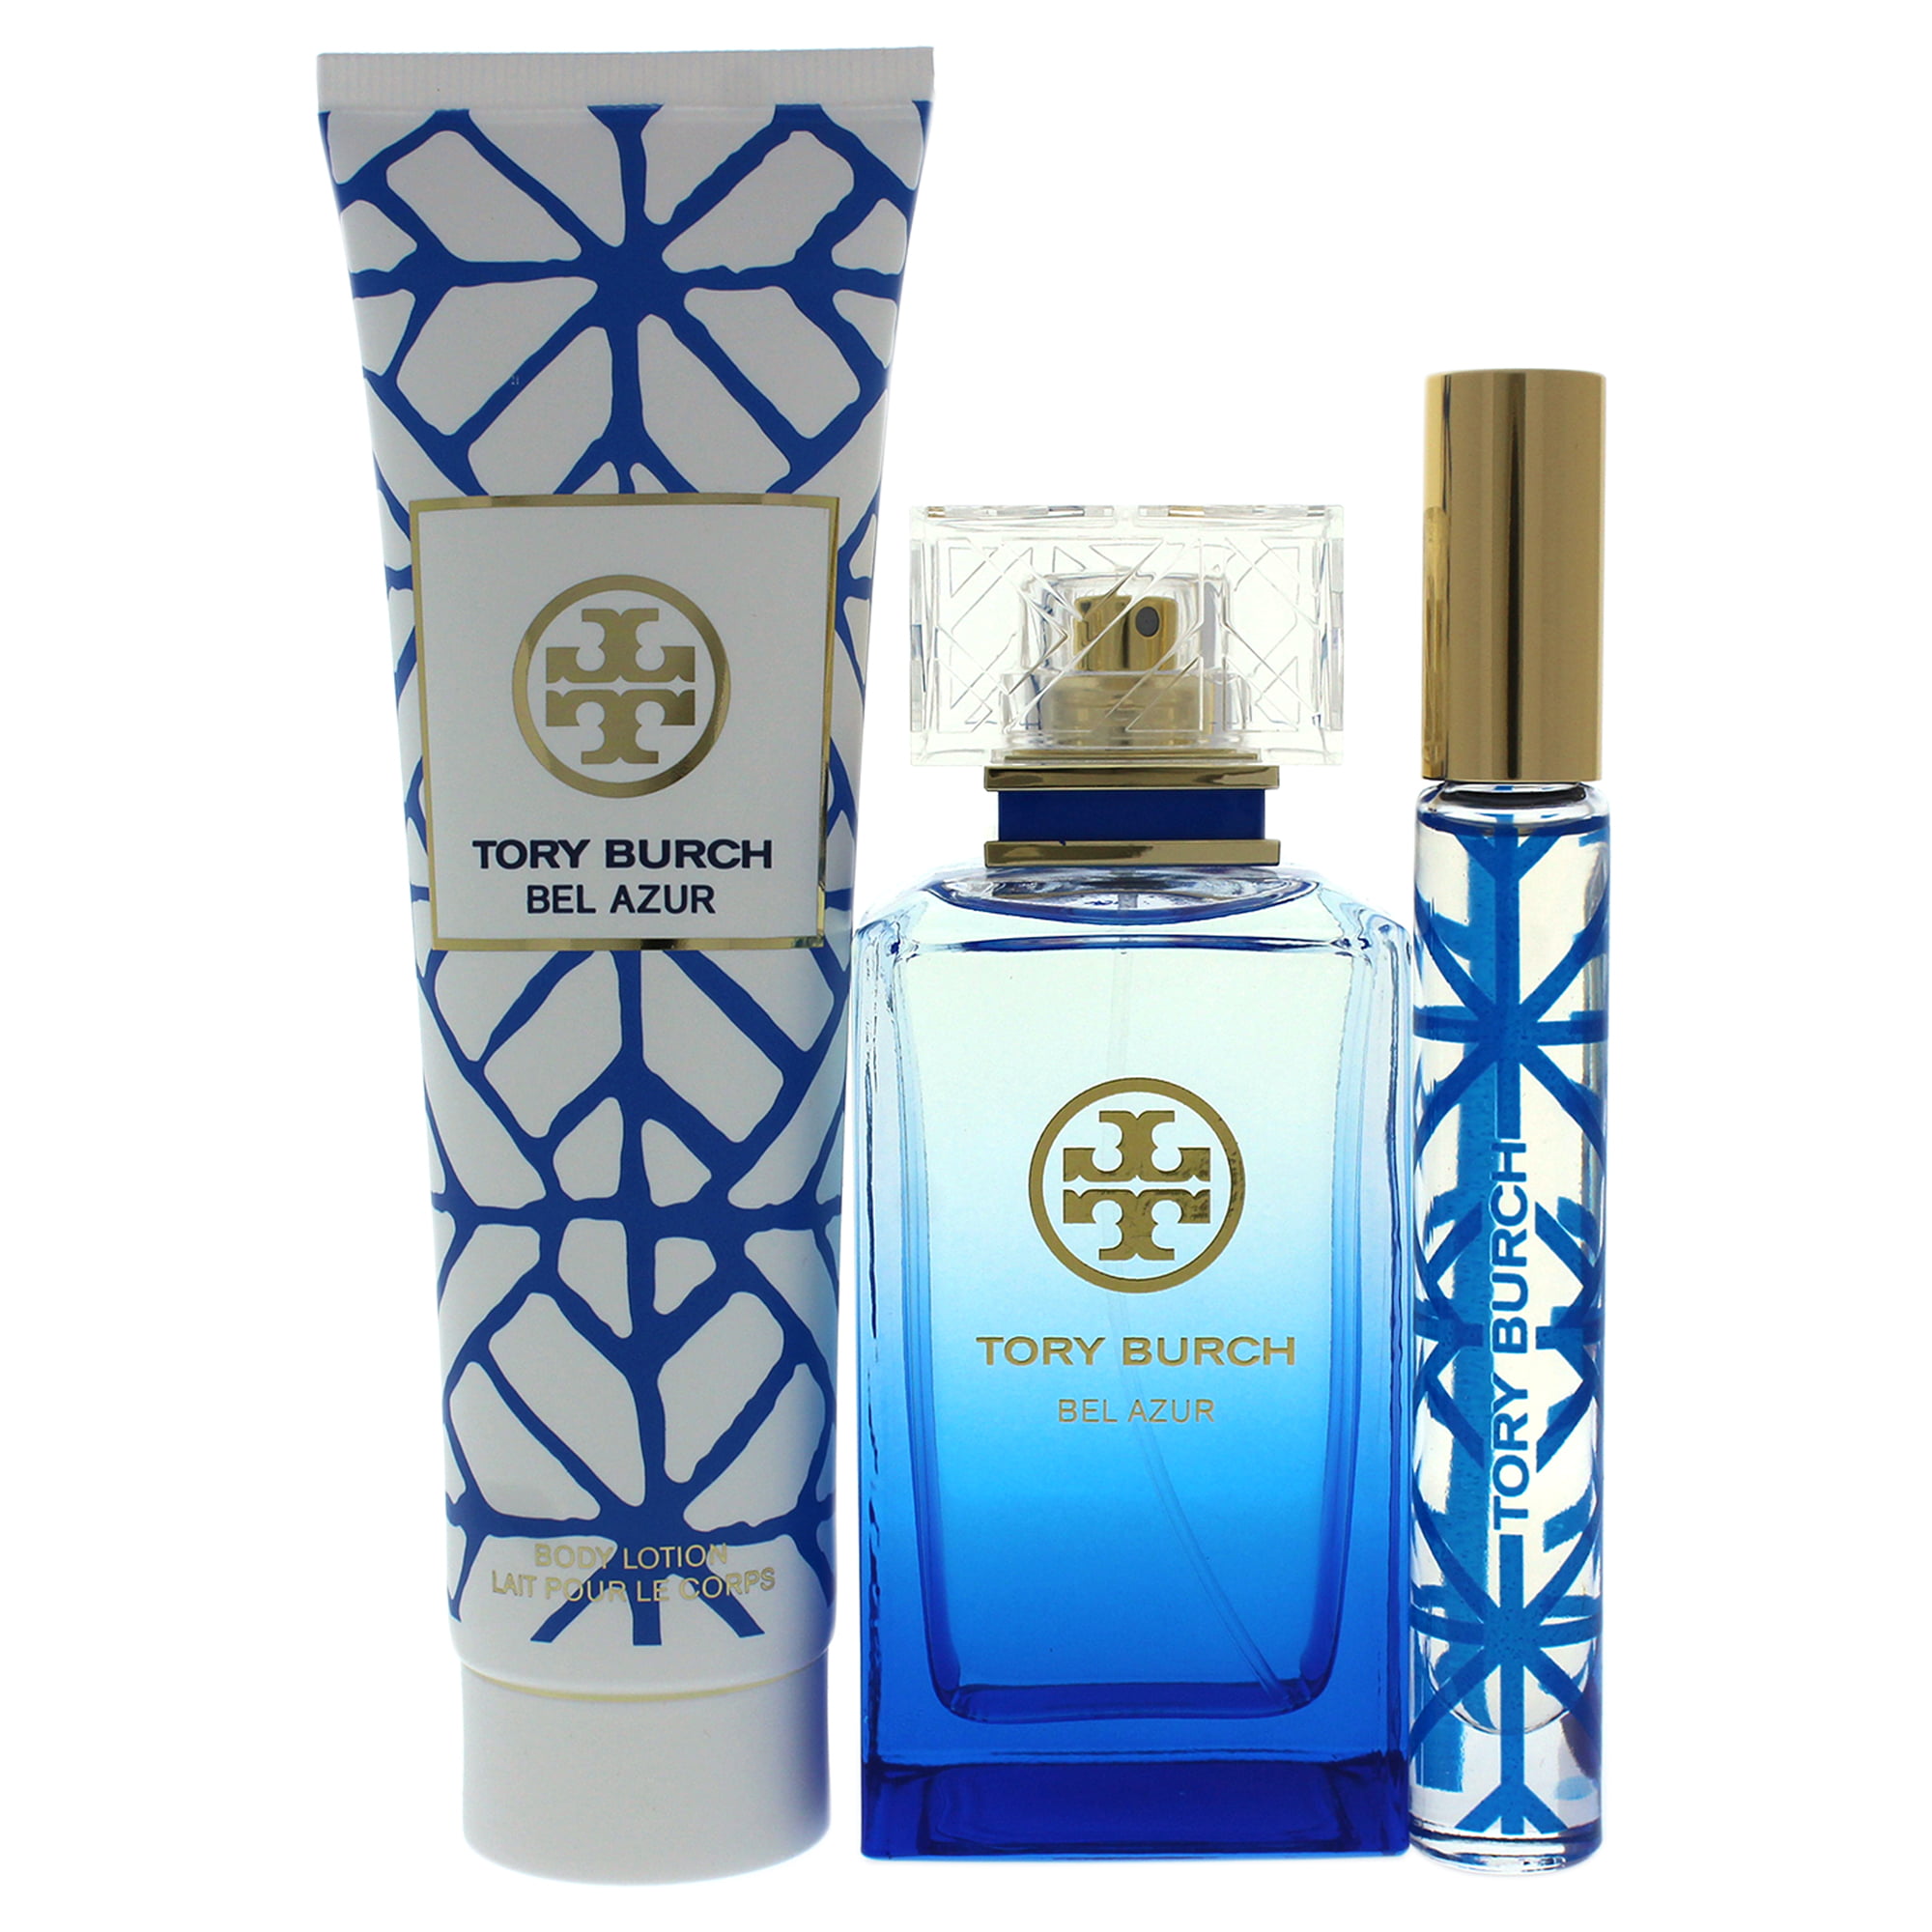 Tory Burch Bel Azure Perfume Perfume Gift Set for Women, 3 Pieces -  